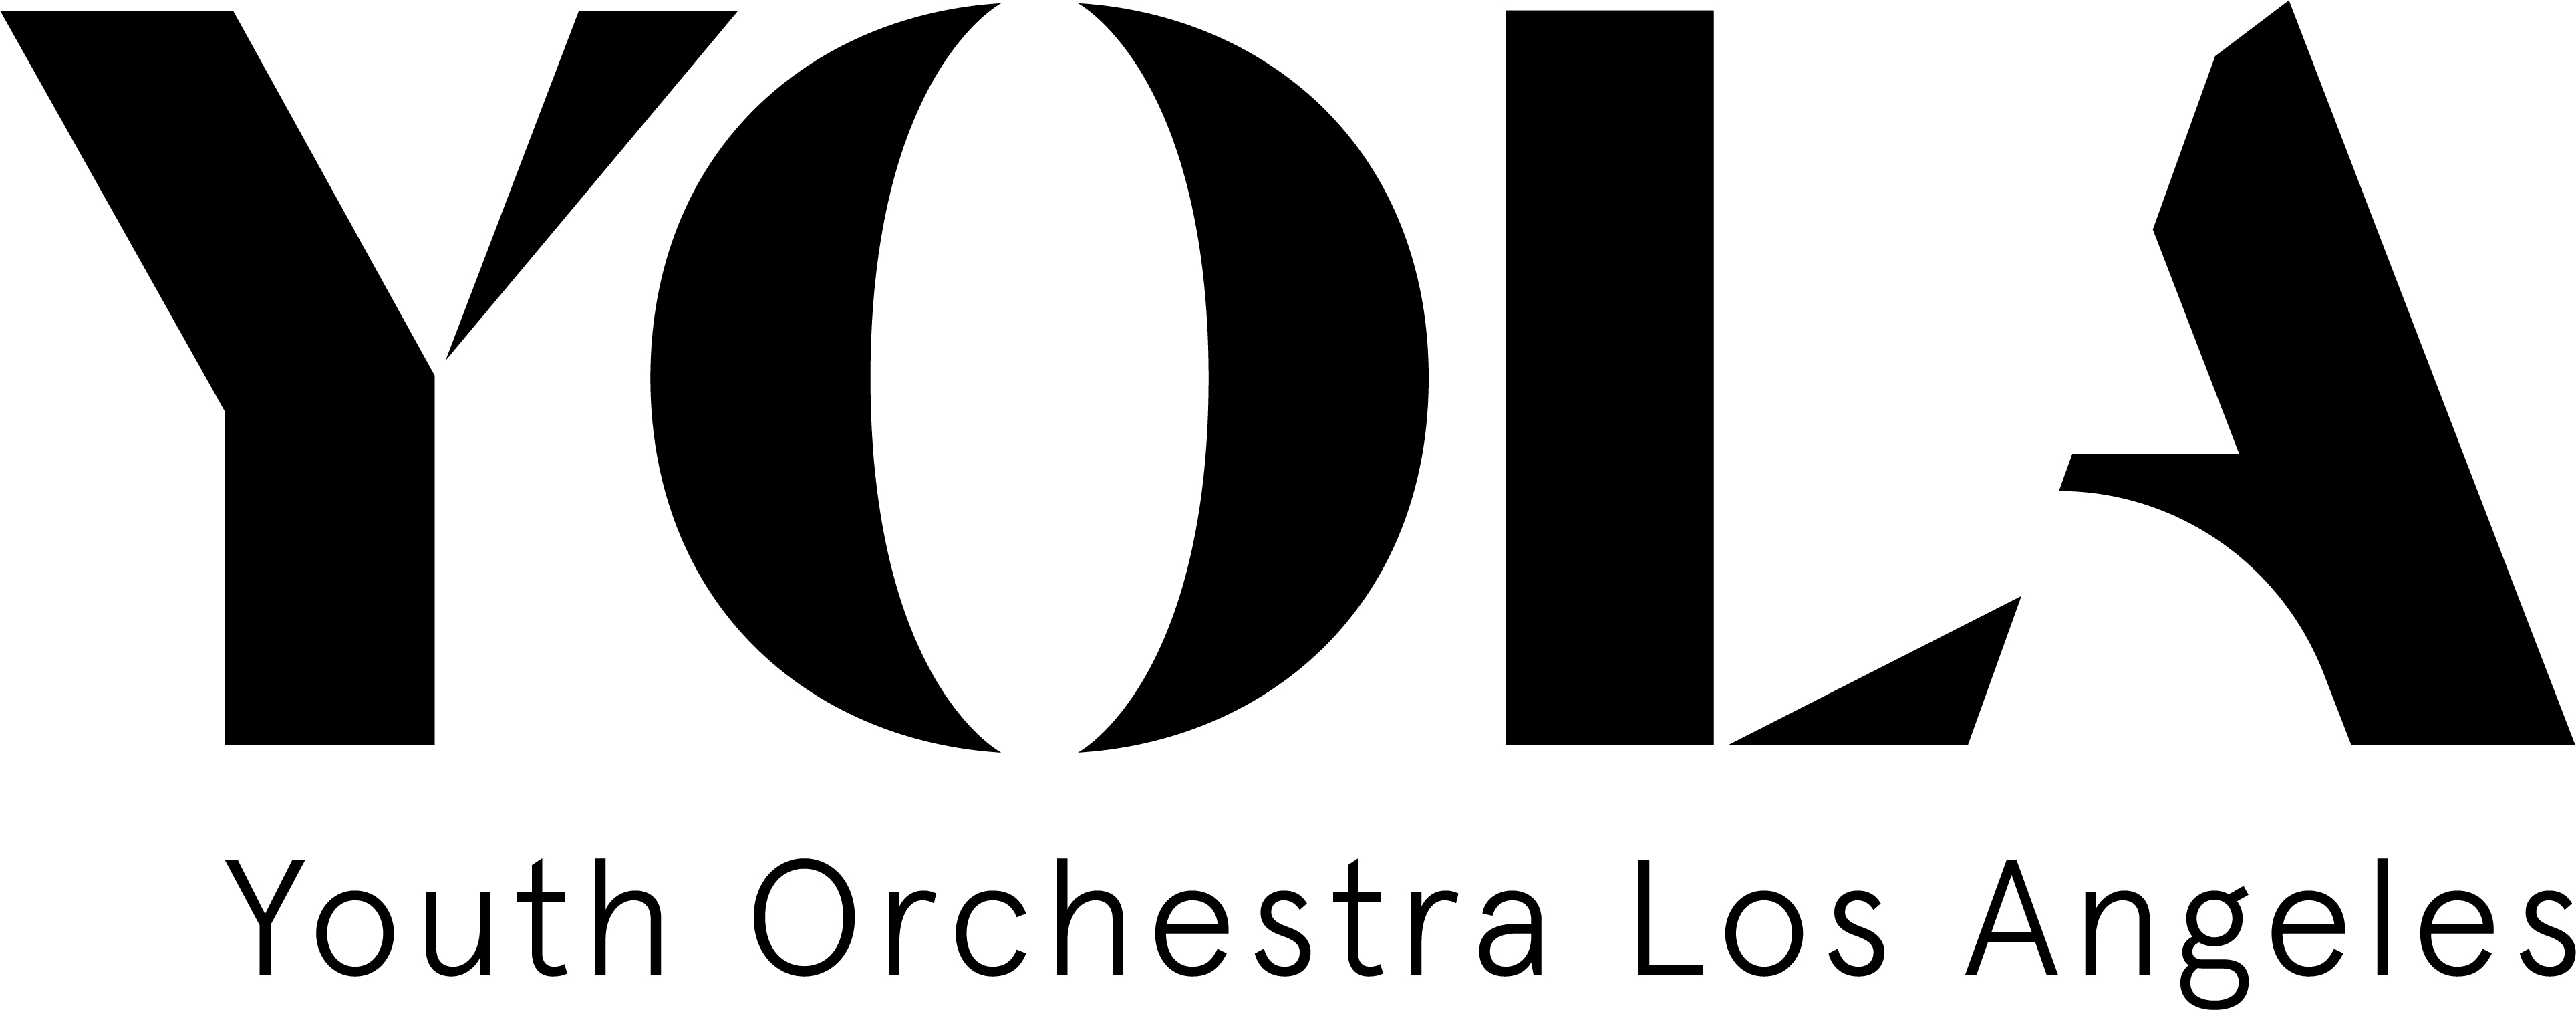 YOLA (Youth Orchestra Los Angeles)